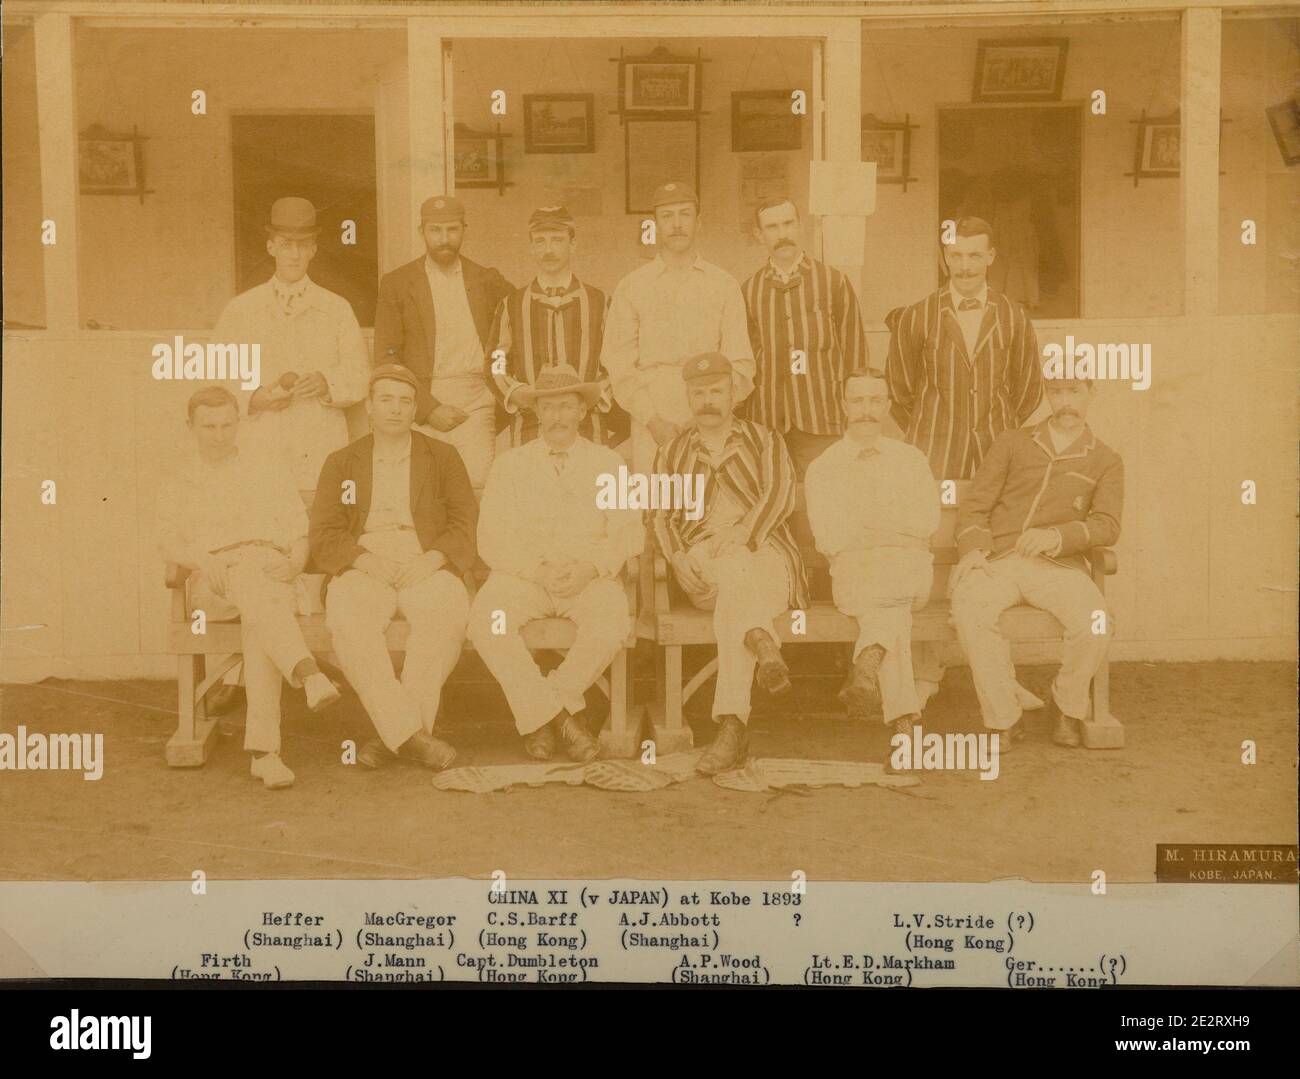 China v Japan at Kobe 1893 cricket team photograph Stock Photo